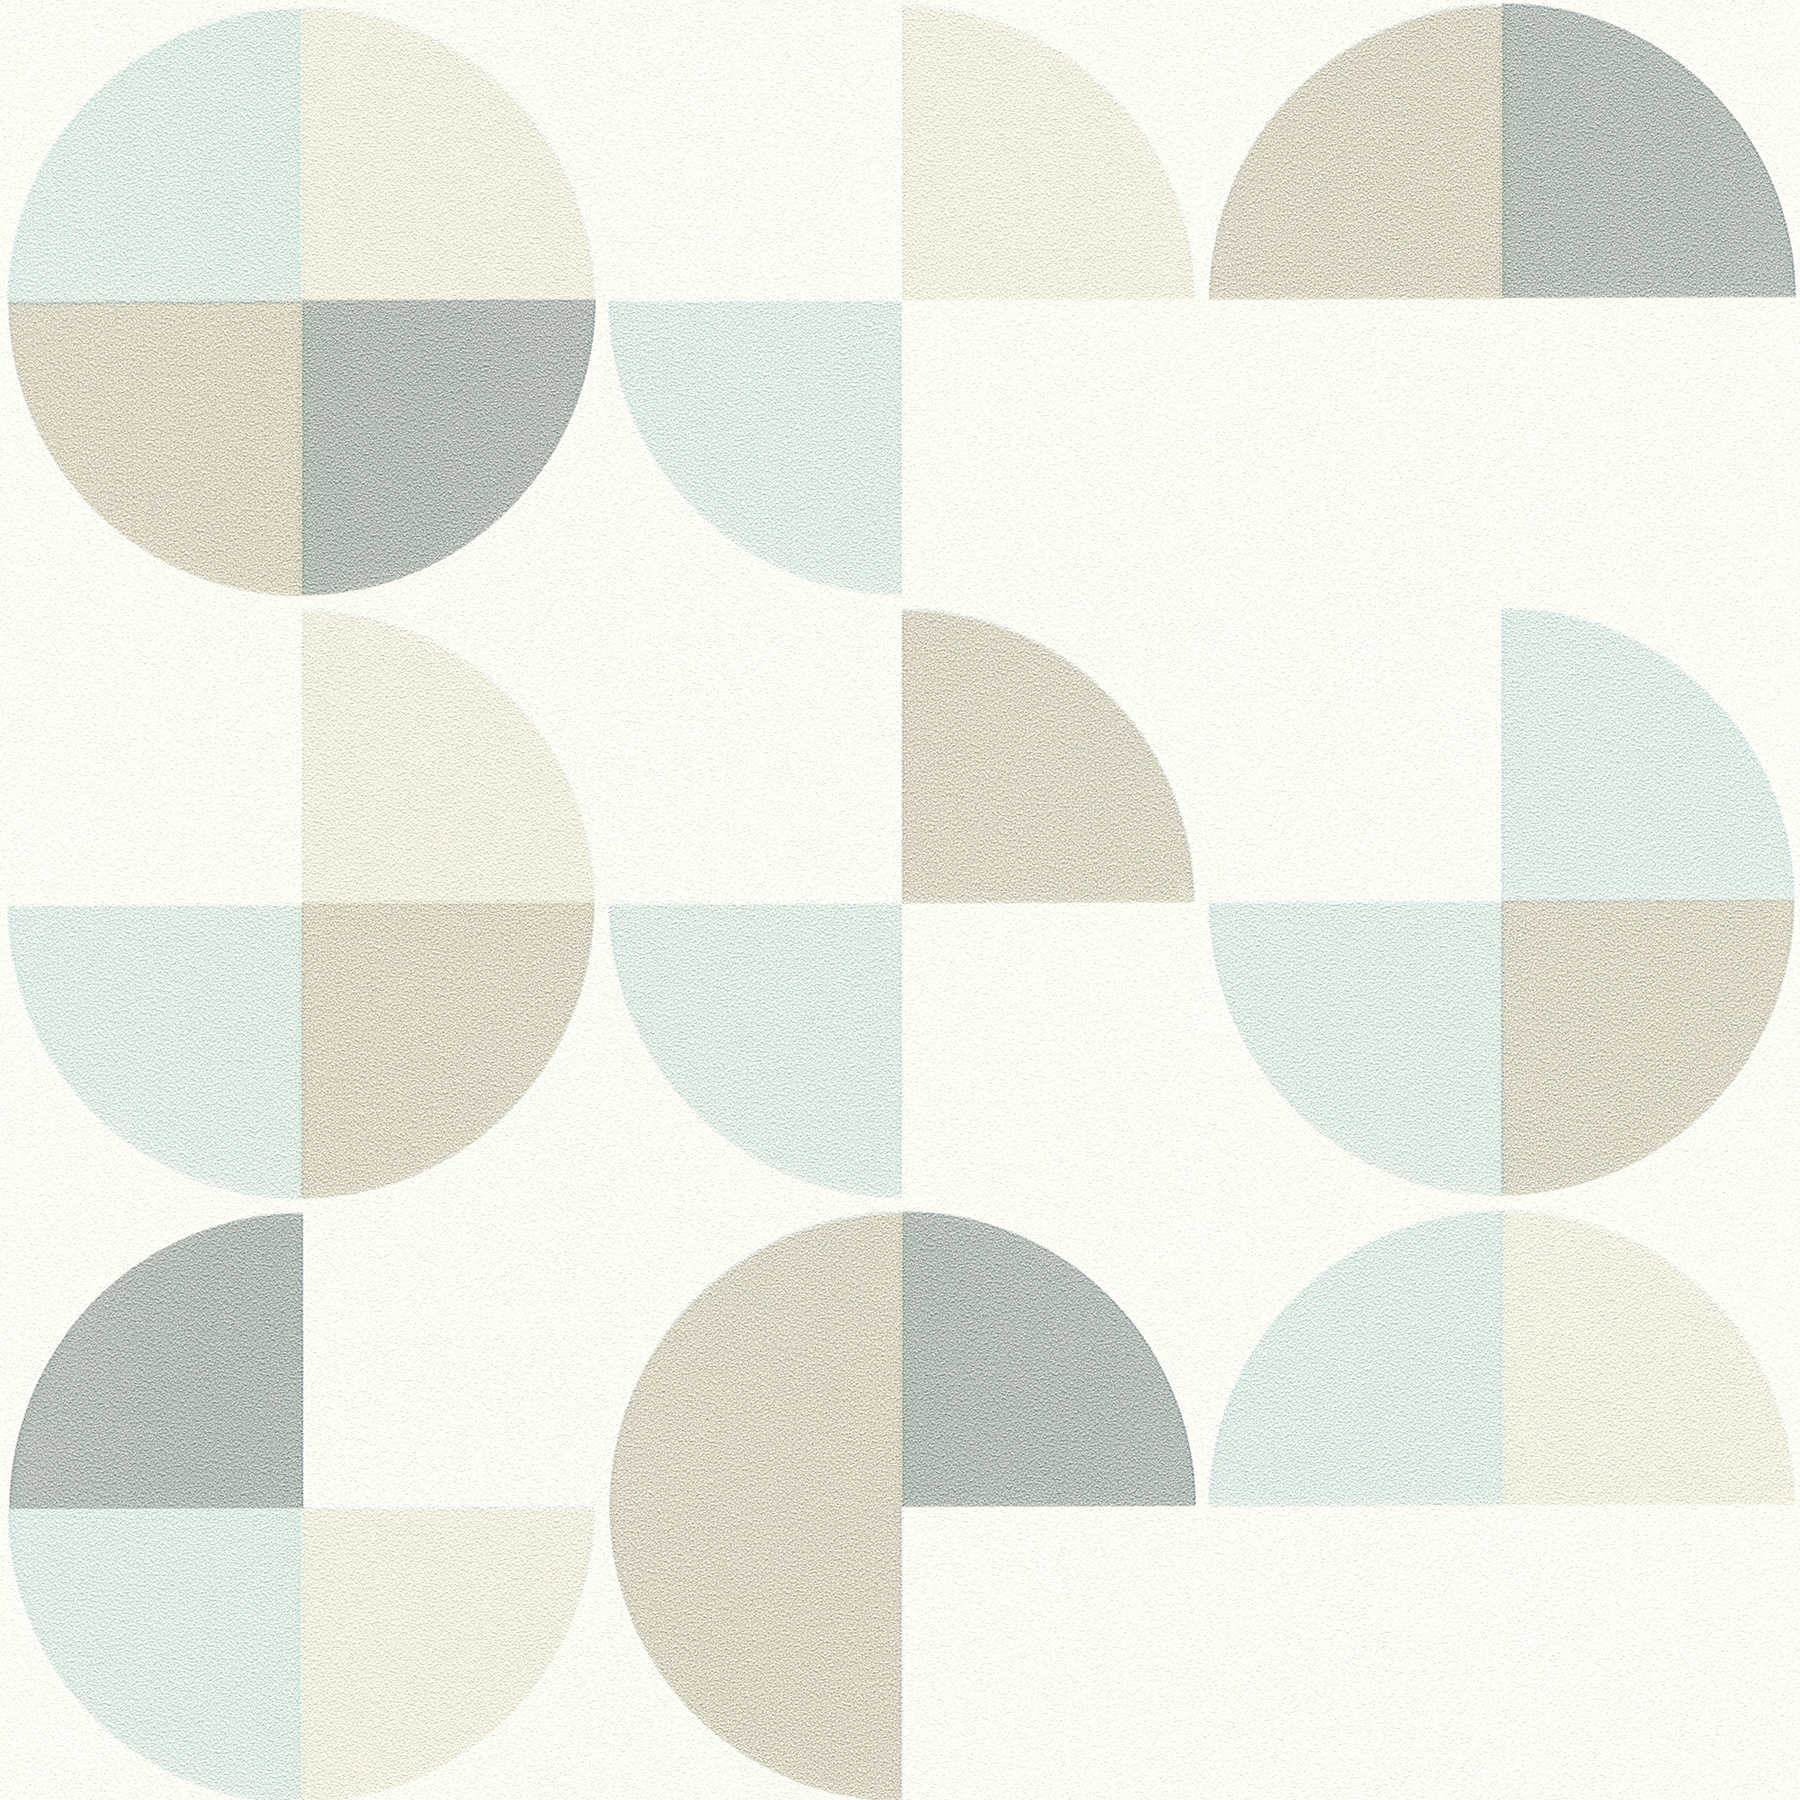 Carta da parati con motivi geometrici in stile scandinavo - blu, grigio, beige
